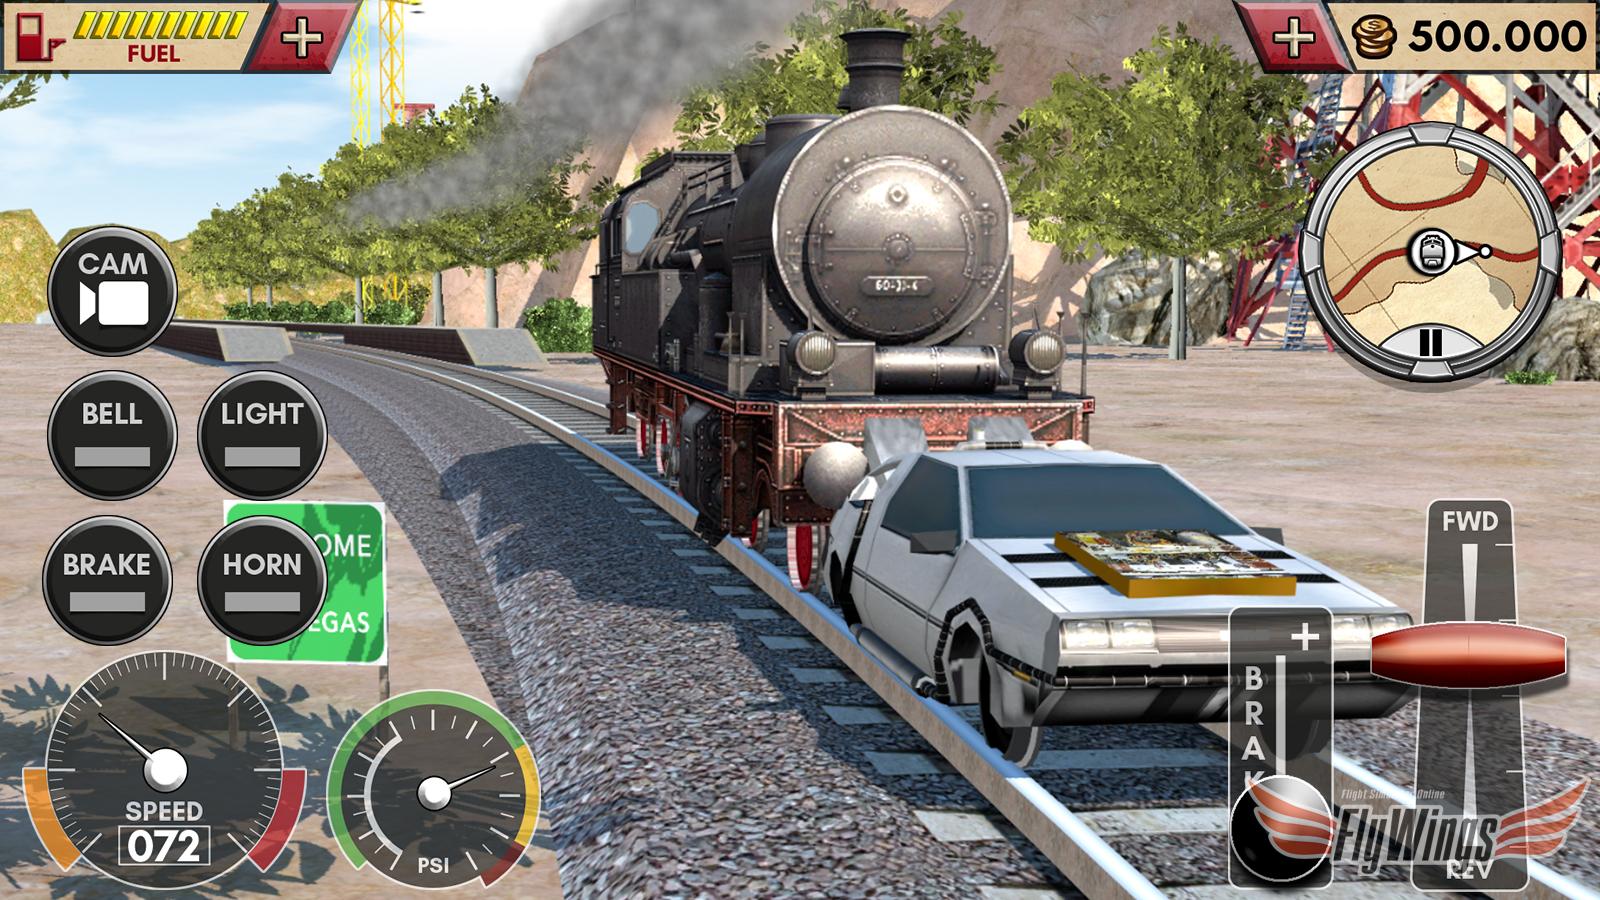 Train Simulator 2016 HD (Mod Money)